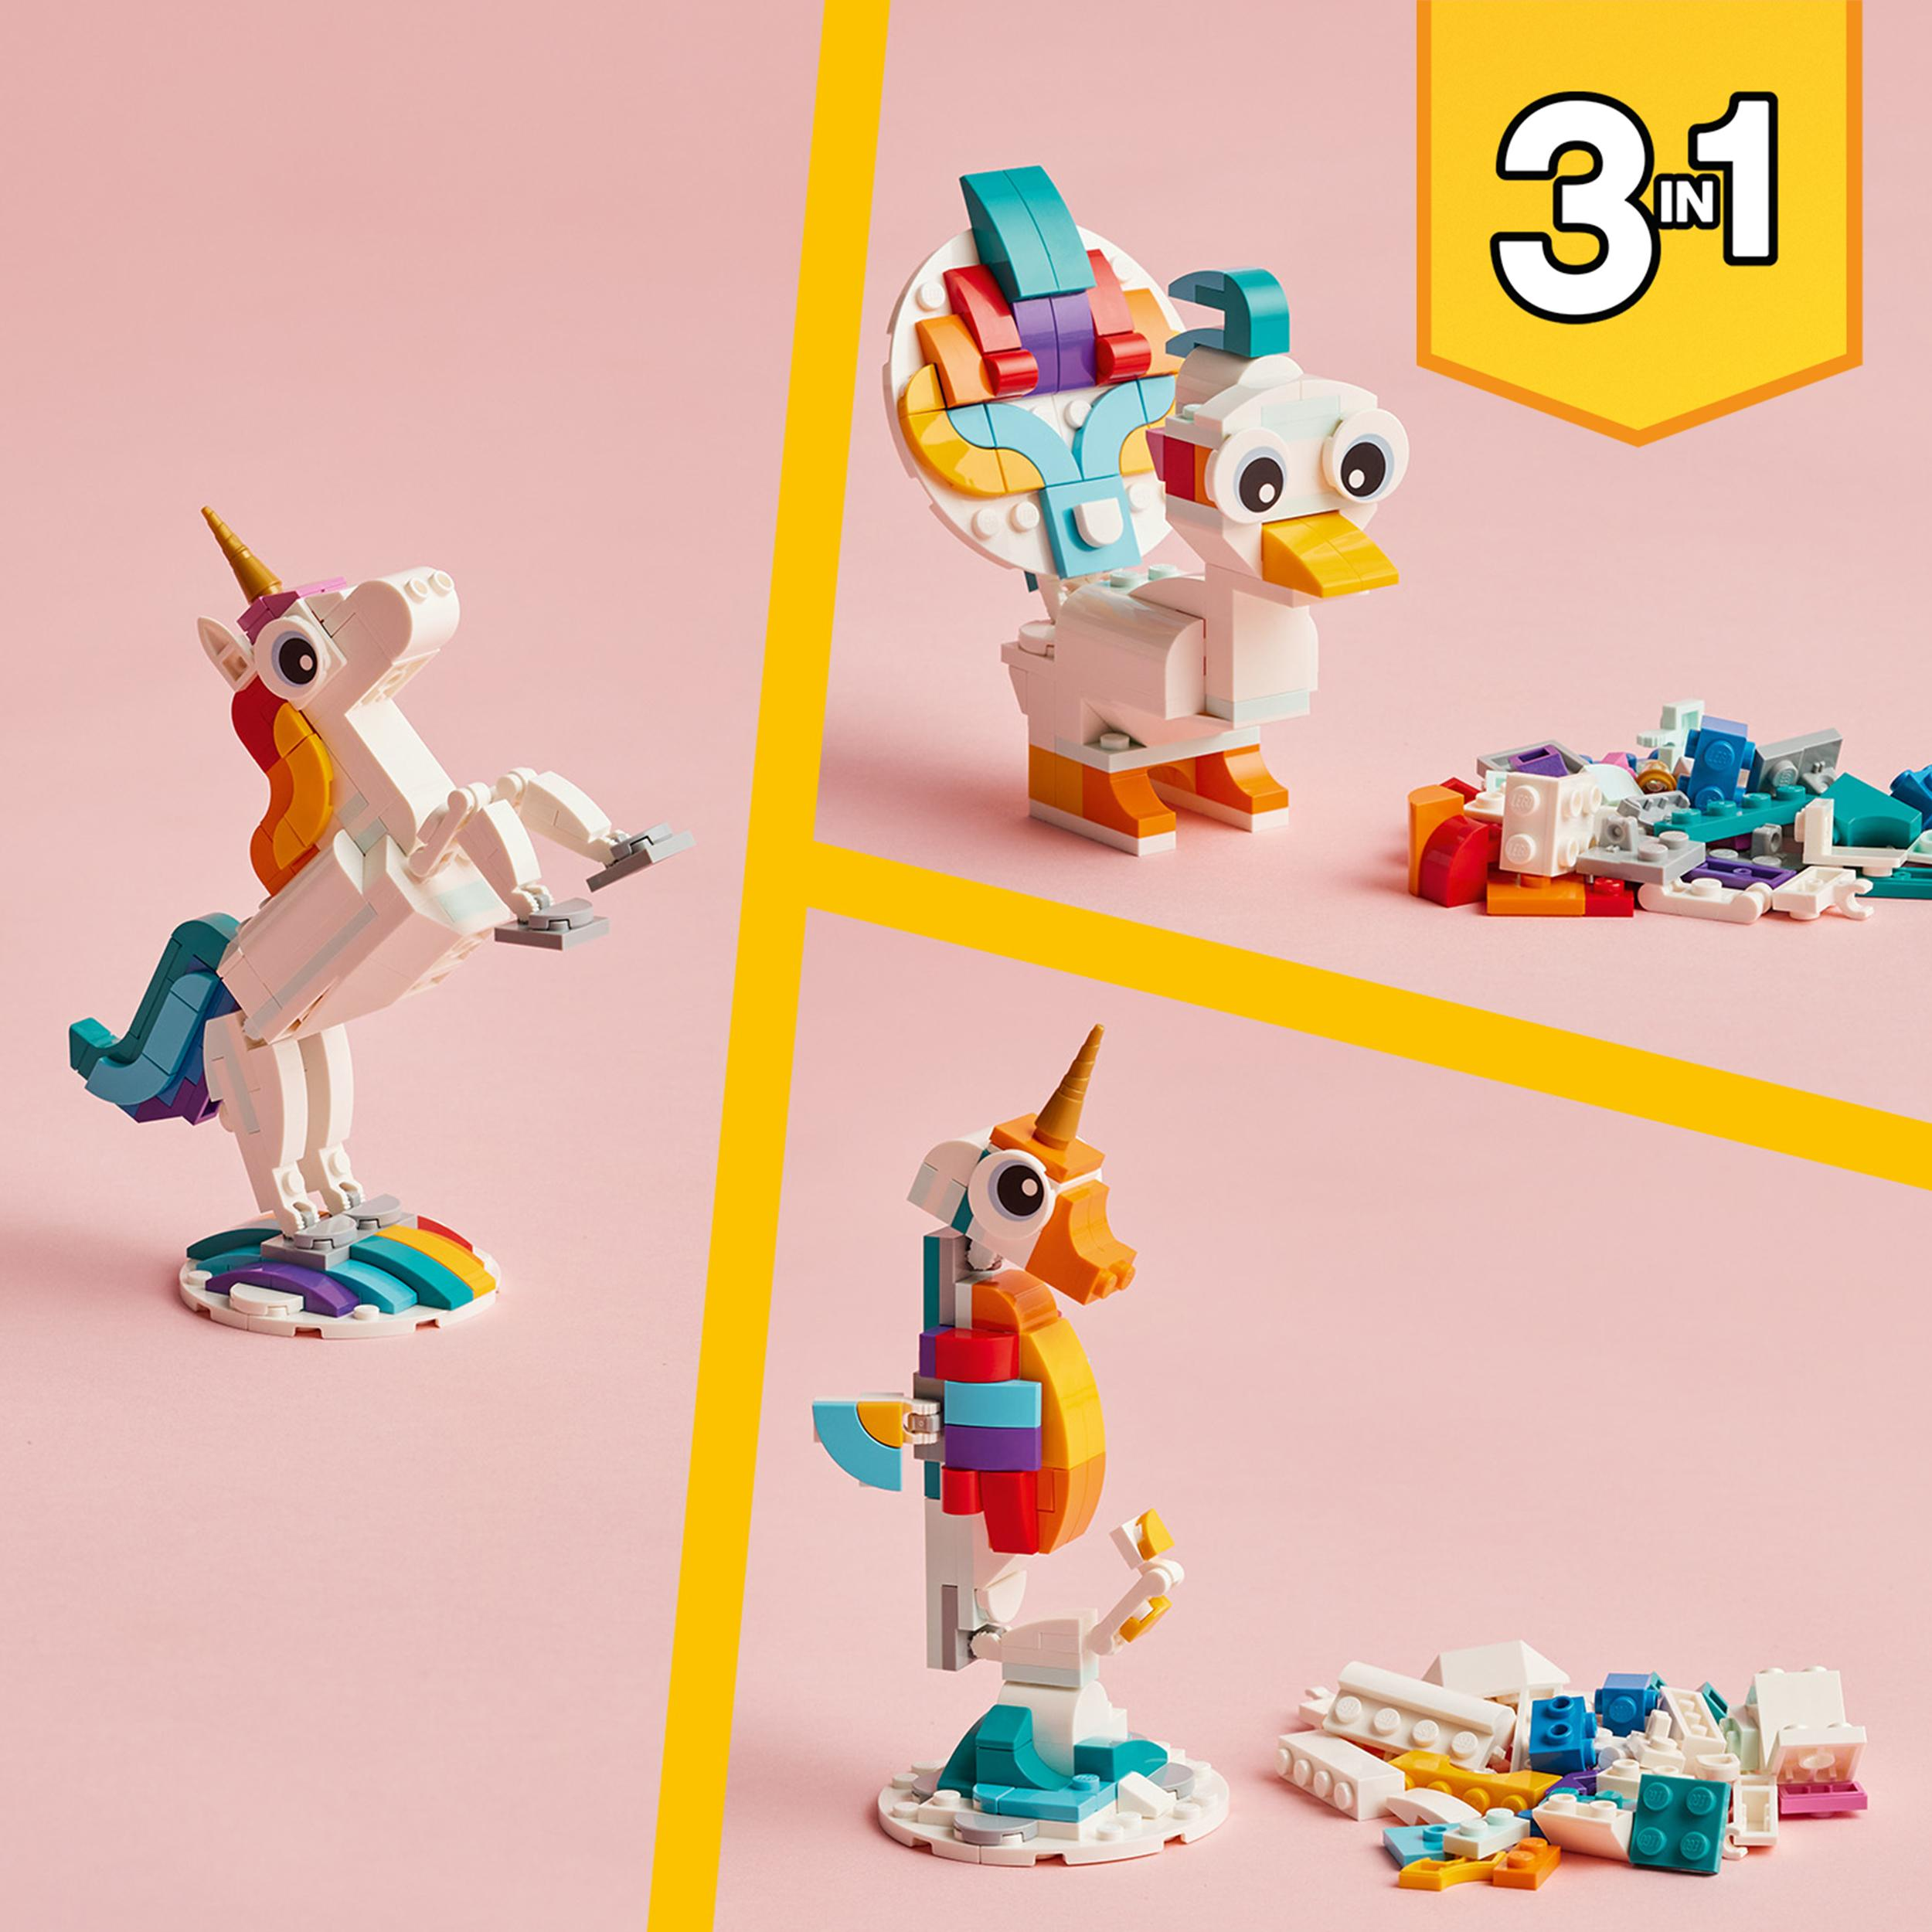 Einhorn Creator LEGO Bausatz, Mehrfarbig 31140 Magisches